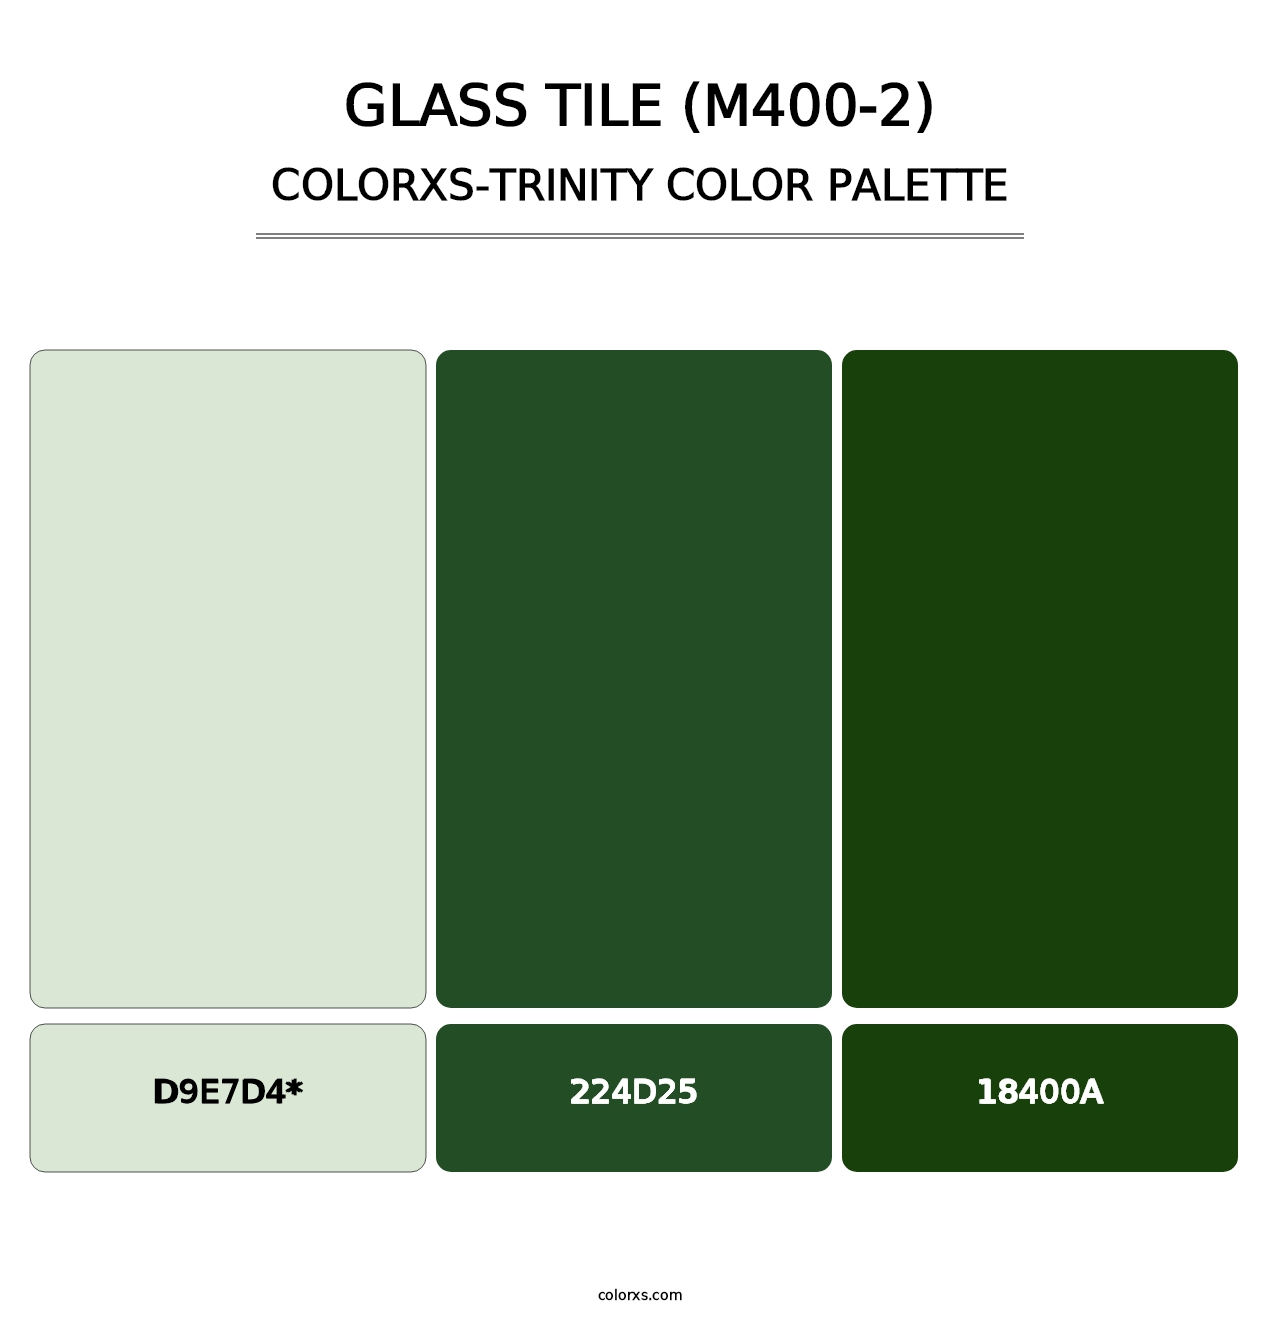 Glass Tile (M400-2) - Colorxs Trinity Palette